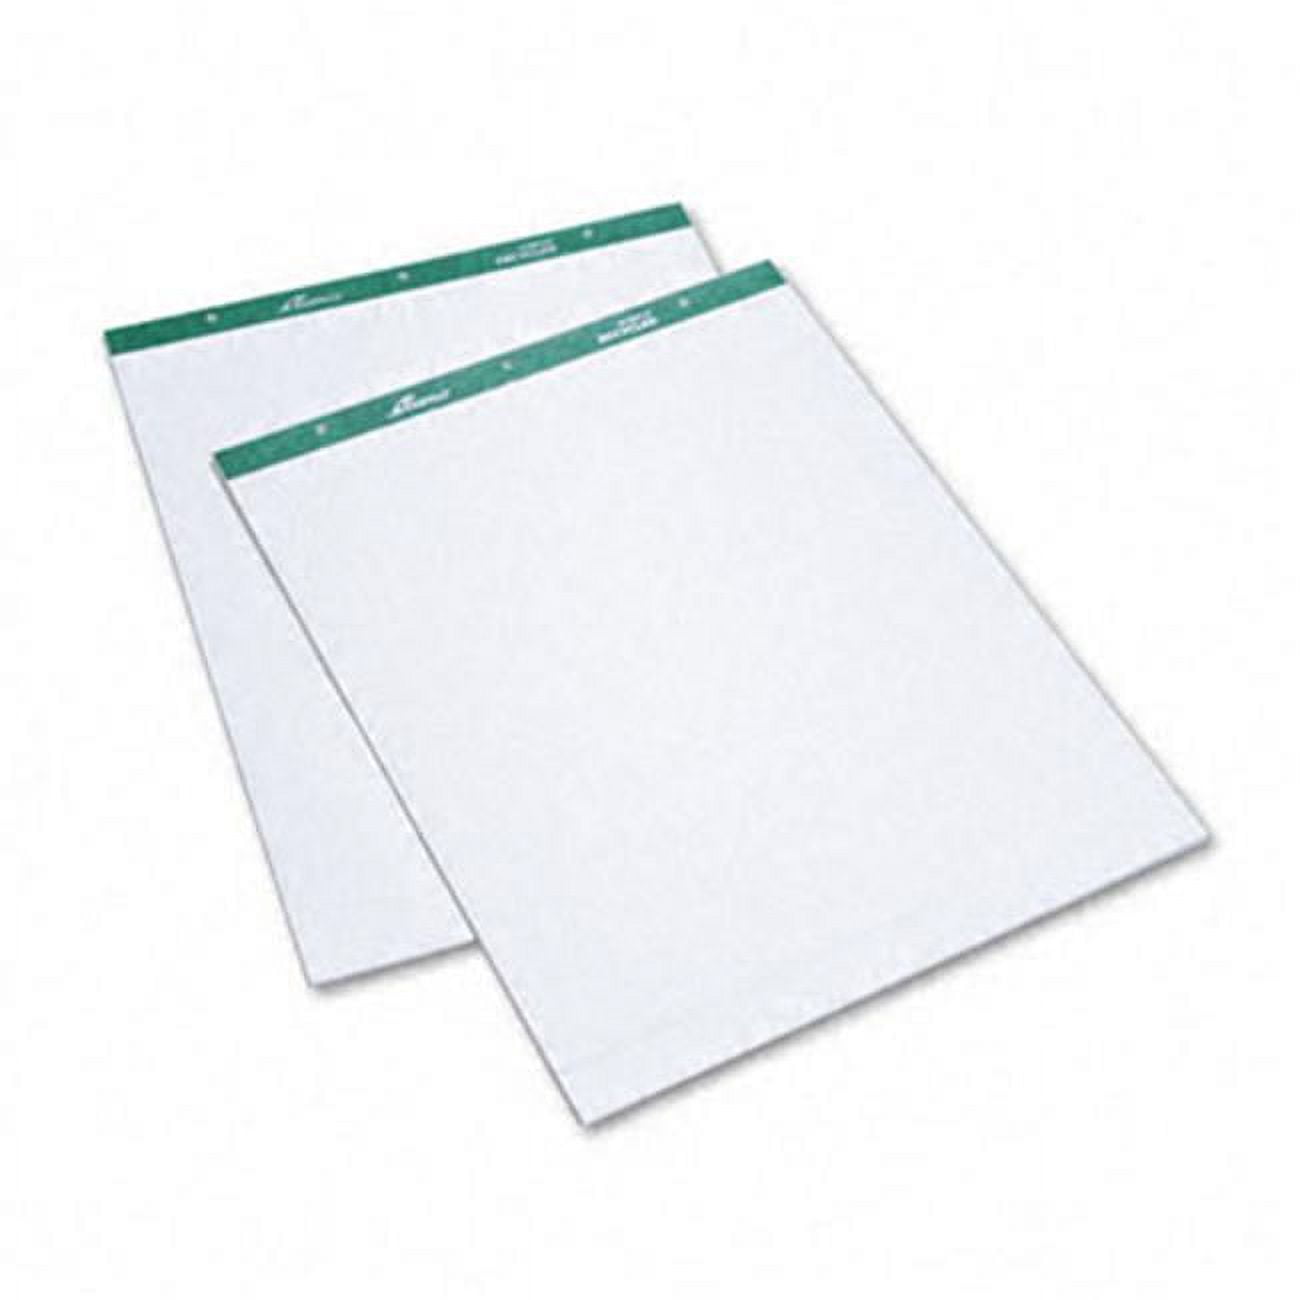 Ampad® Flip Charts/Easel Pads, 20 x 25.5, UnRuled,50 Sheets